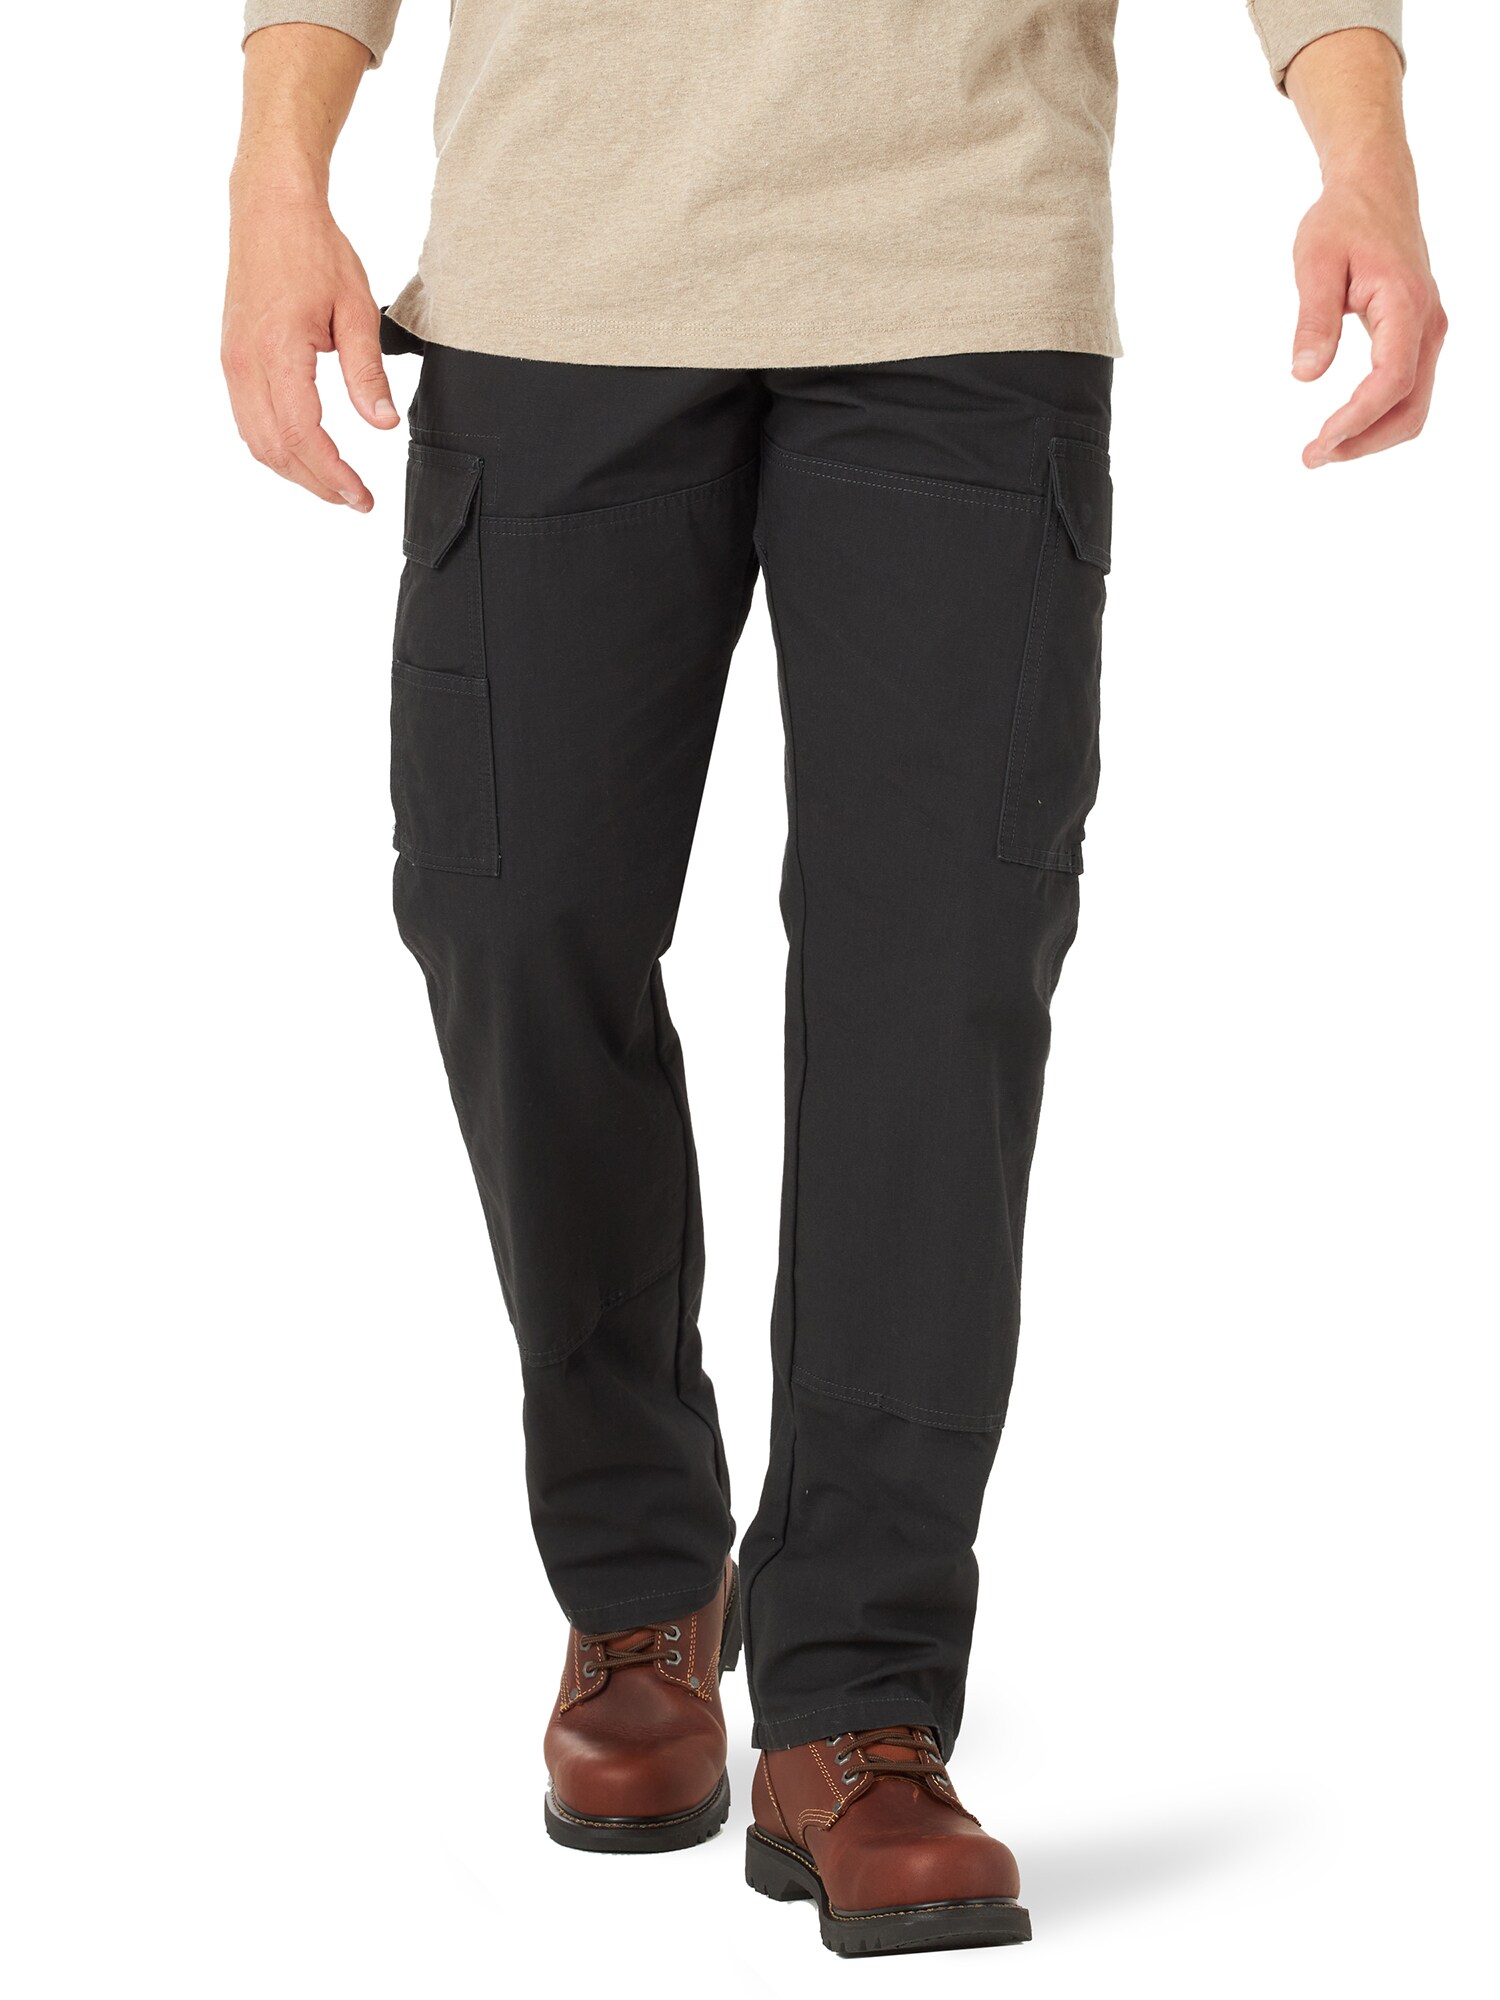 Buy Wrangler Men's Green & Brown Camo Flex Cargo Pants Relaxed Fit Straight  Leg Flat Front w/Hidden Tech Pocket, Green Brown Camo, 38W x 30L at  Amazon.in